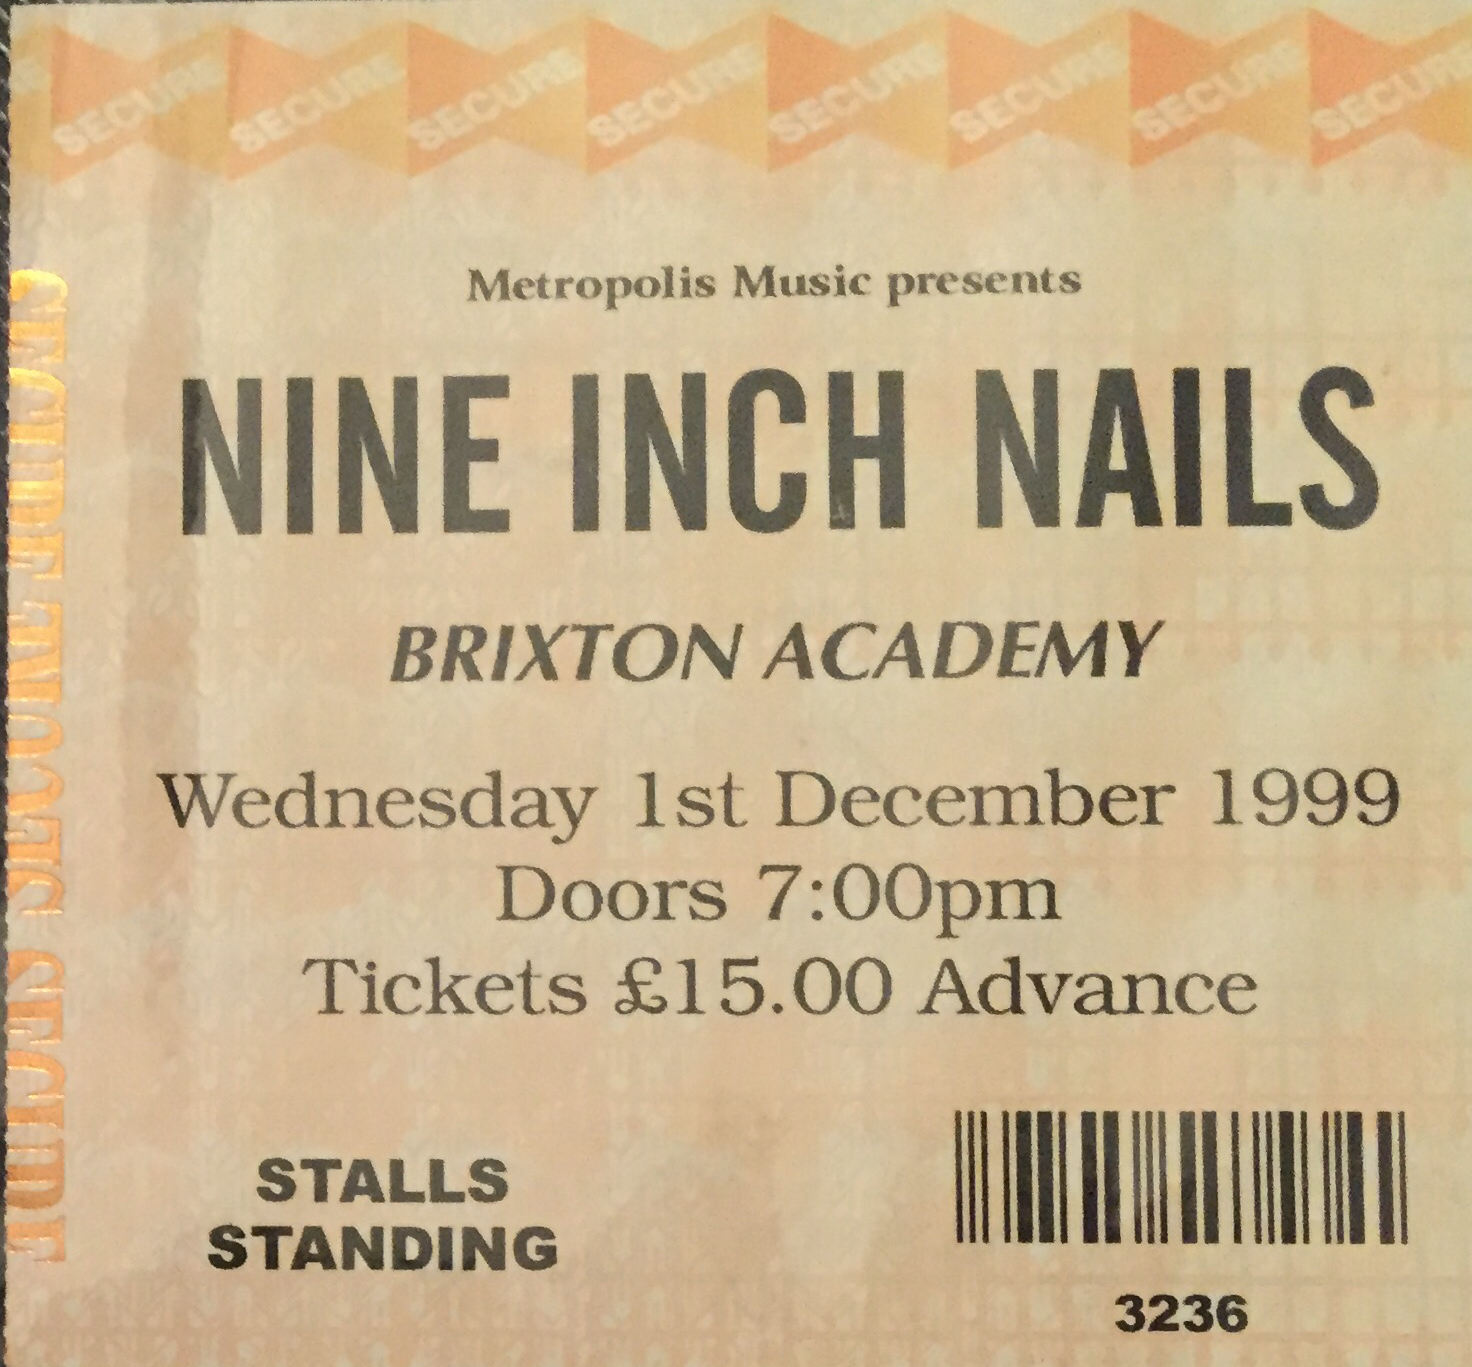 1999/12/01 Ticket